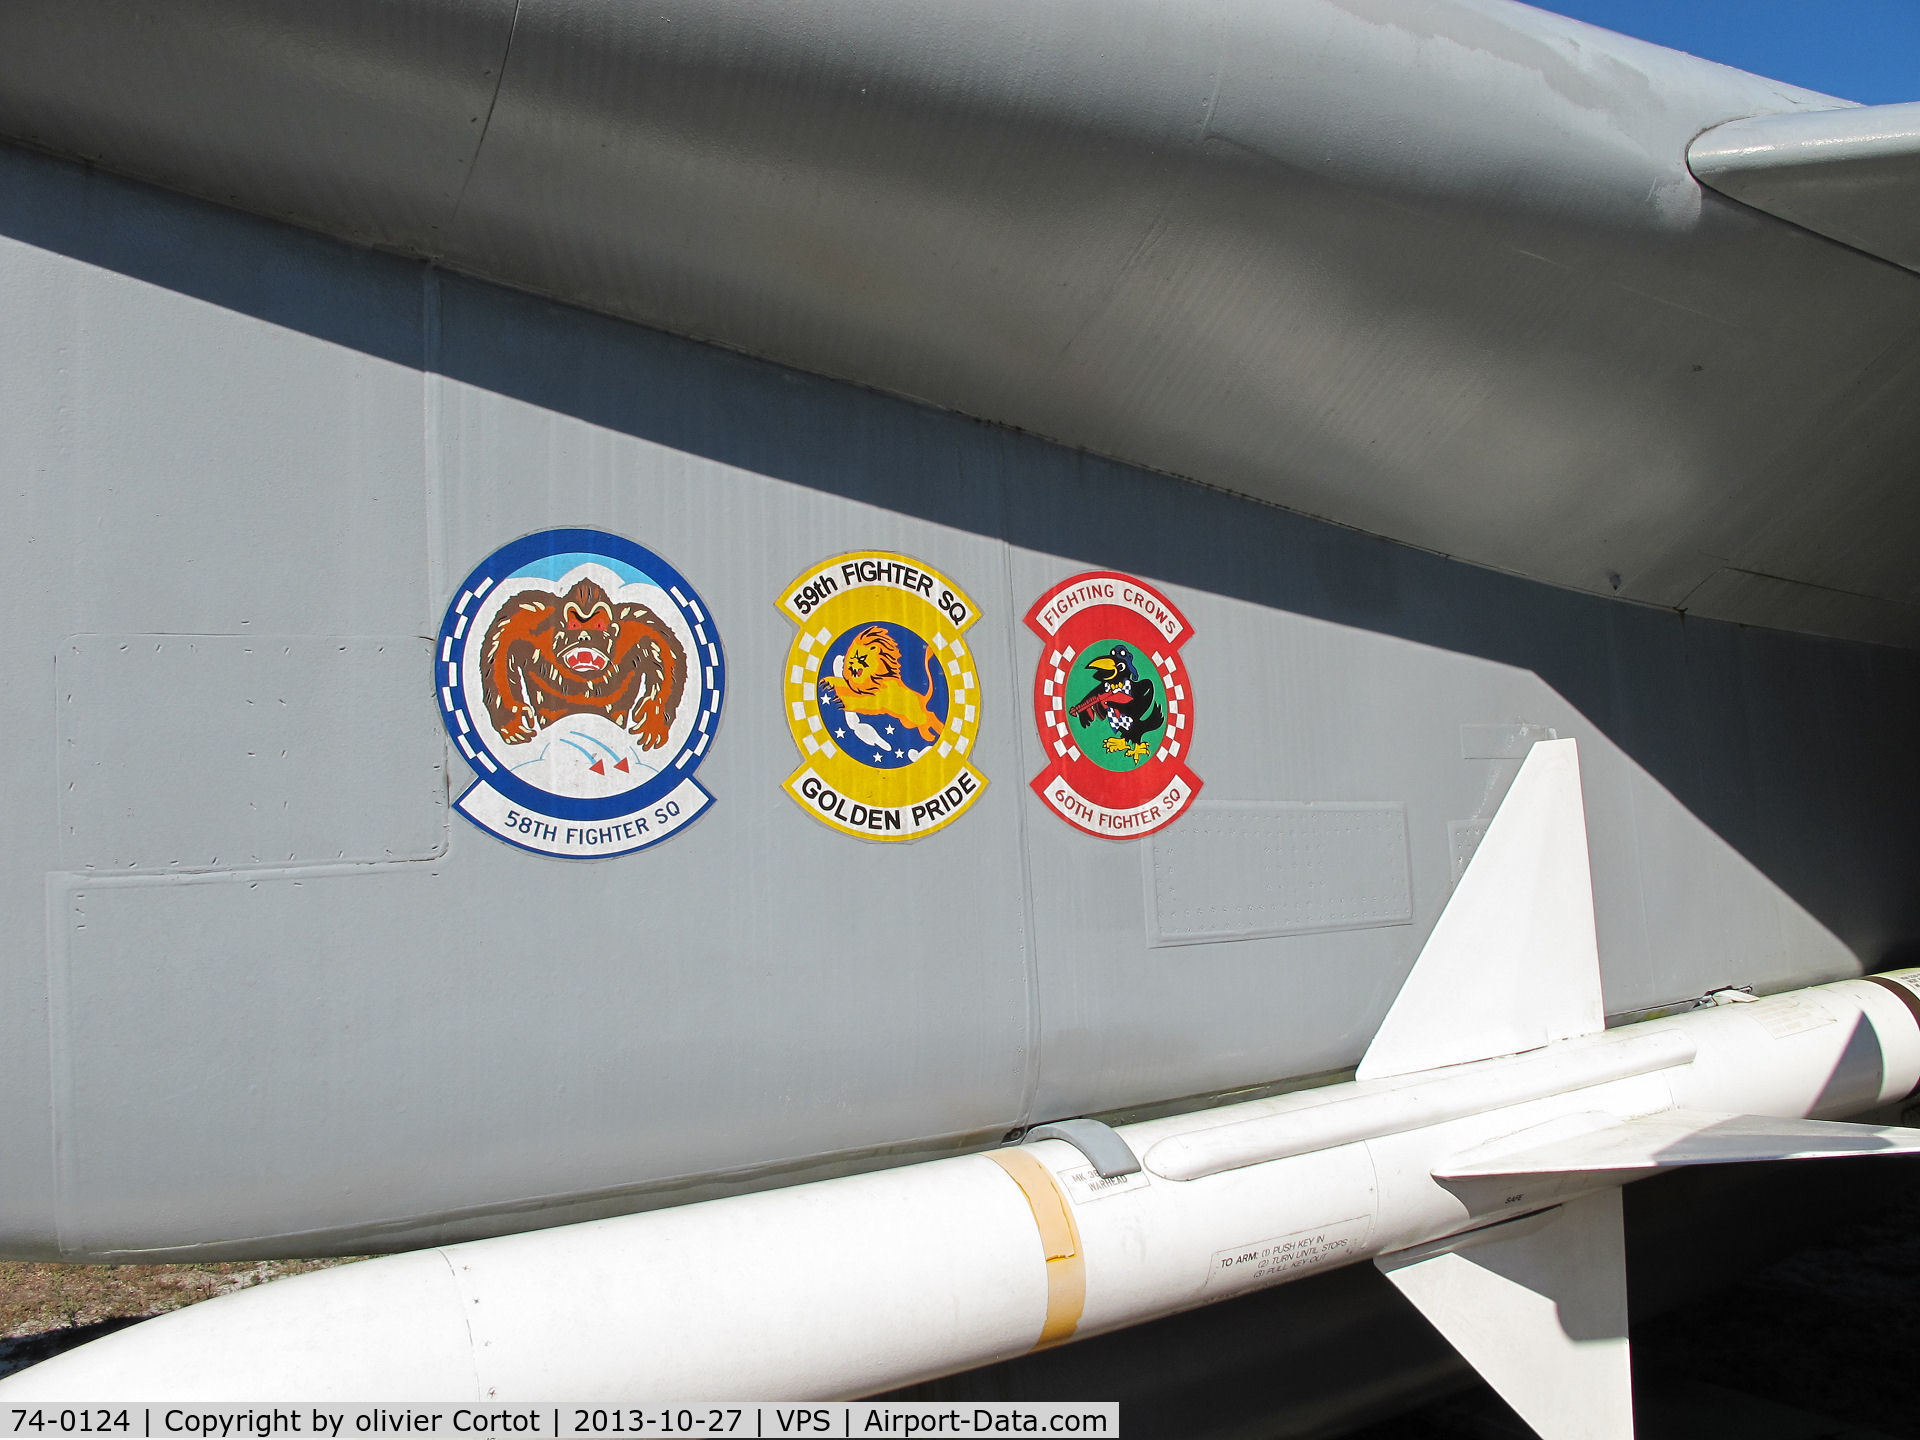 74-0124, McDonnell Douglas F-15A Eagle C/N 0100/A085, squadrons badges and a Sparrow